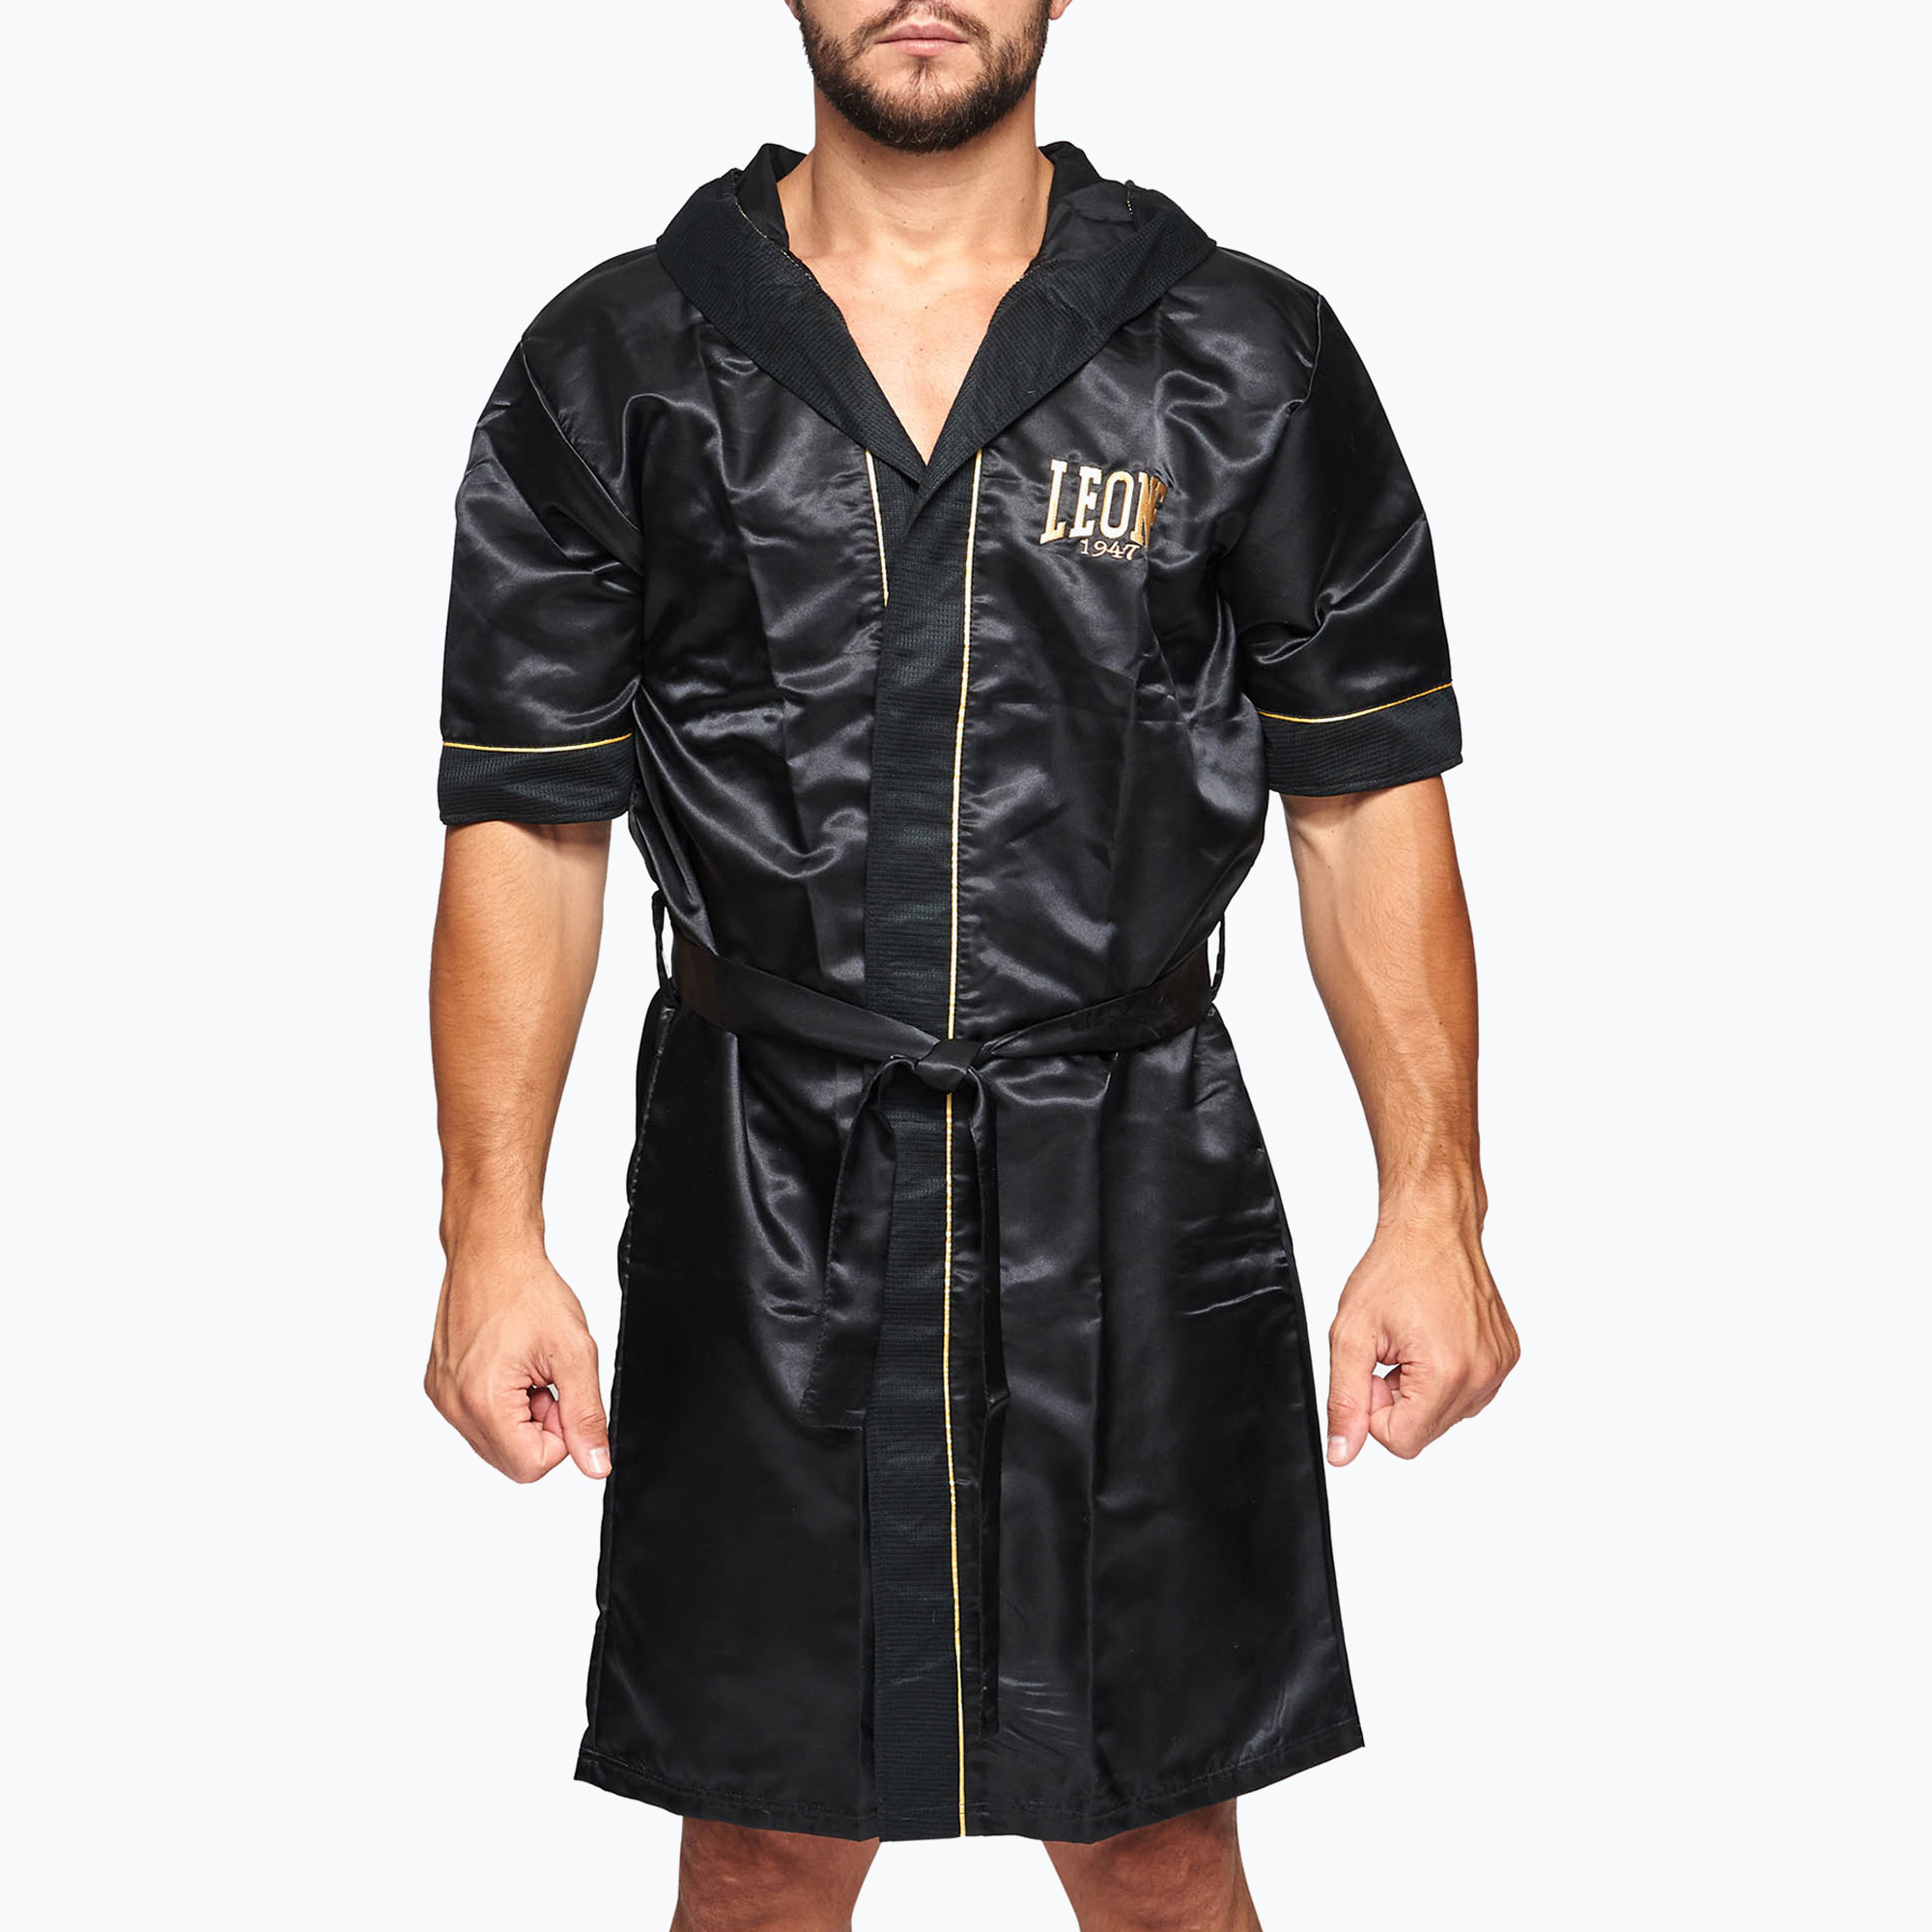 LEONE боксерен халат 1947 premium black